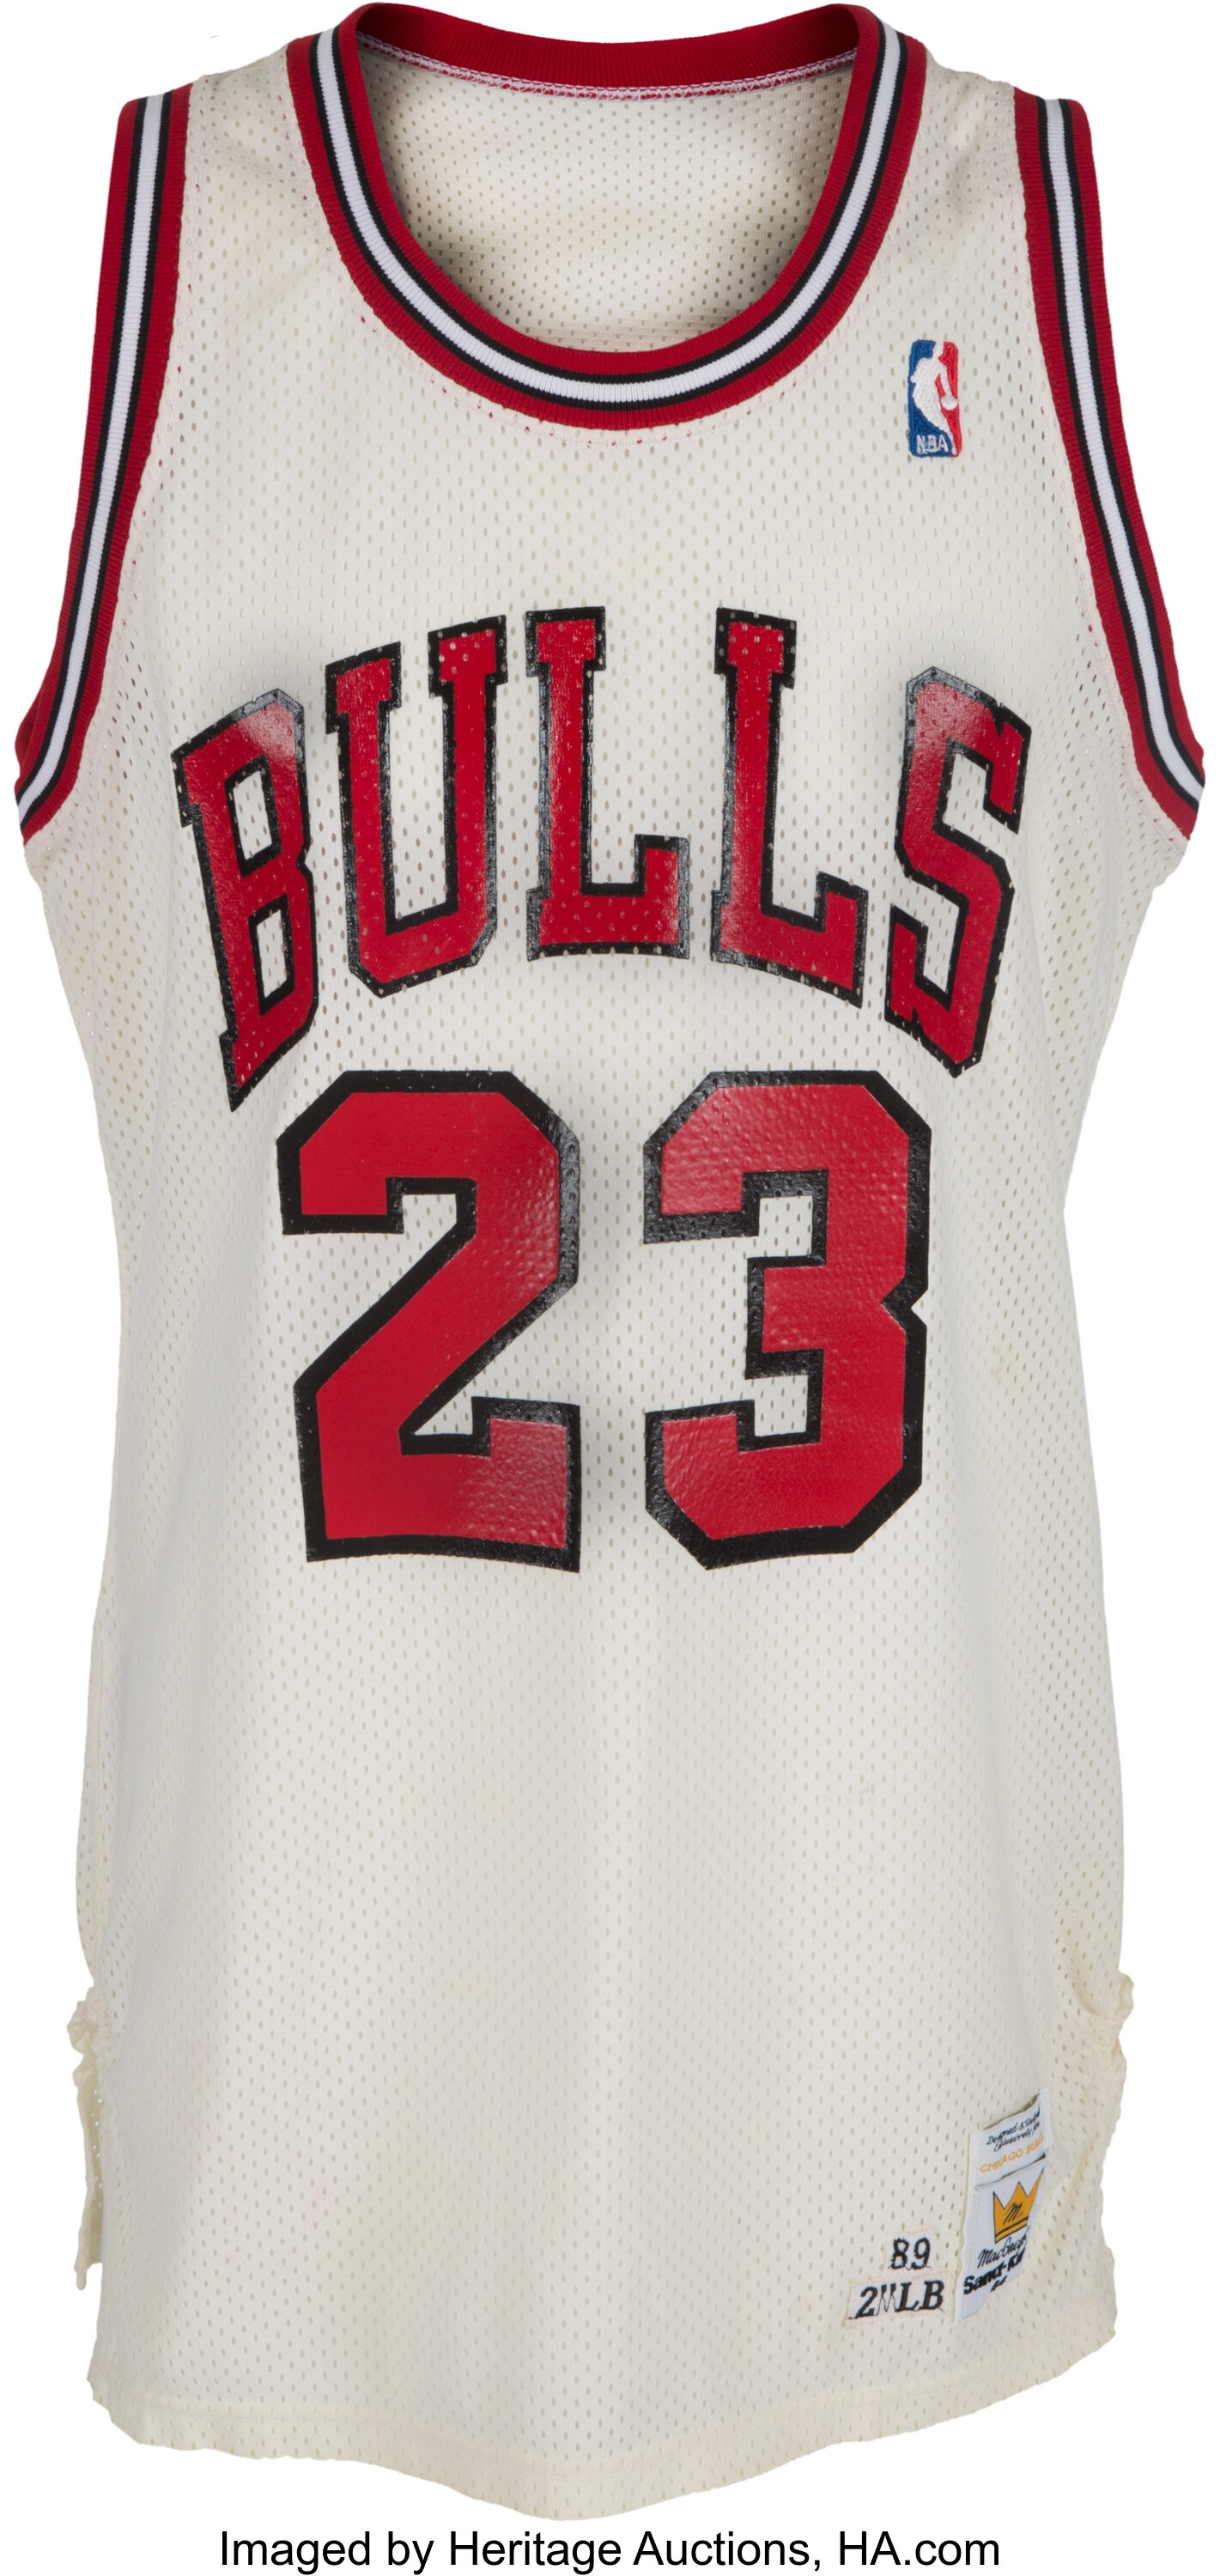 1989-90 Michael Jordan Game Worn Chicago Bulls Jersey.